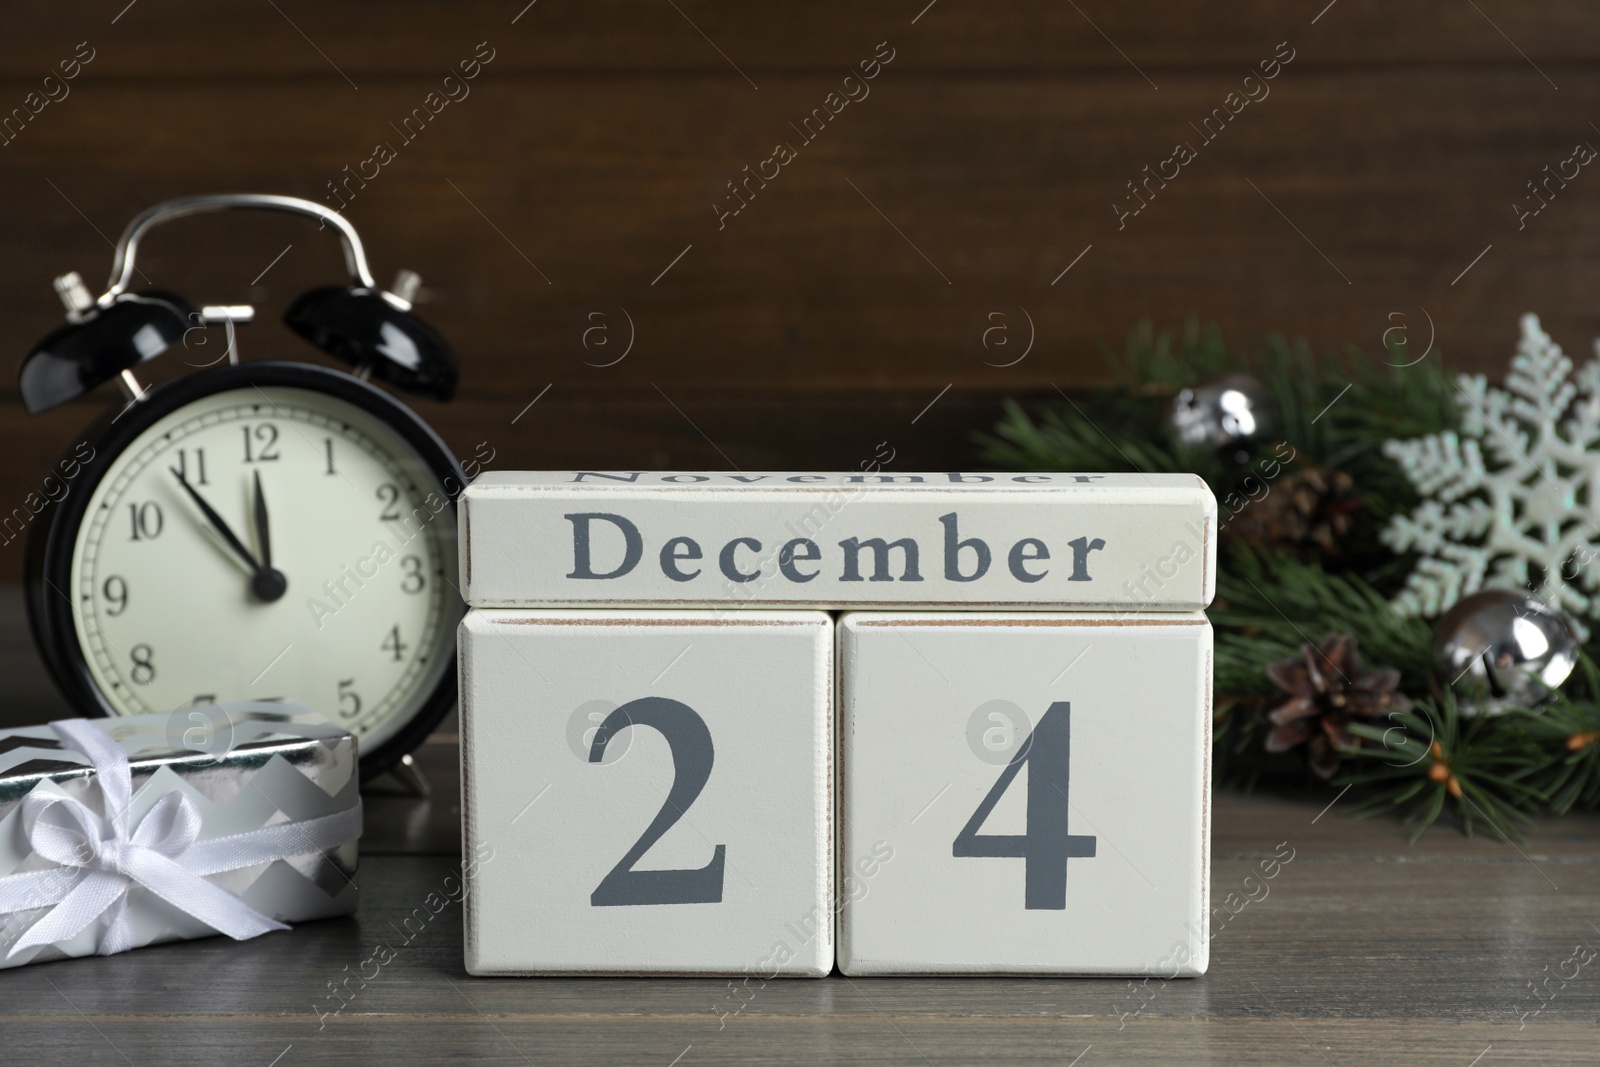 Photo of December 24 - Christmas Eve. Wooden block calendar and festive decor on table